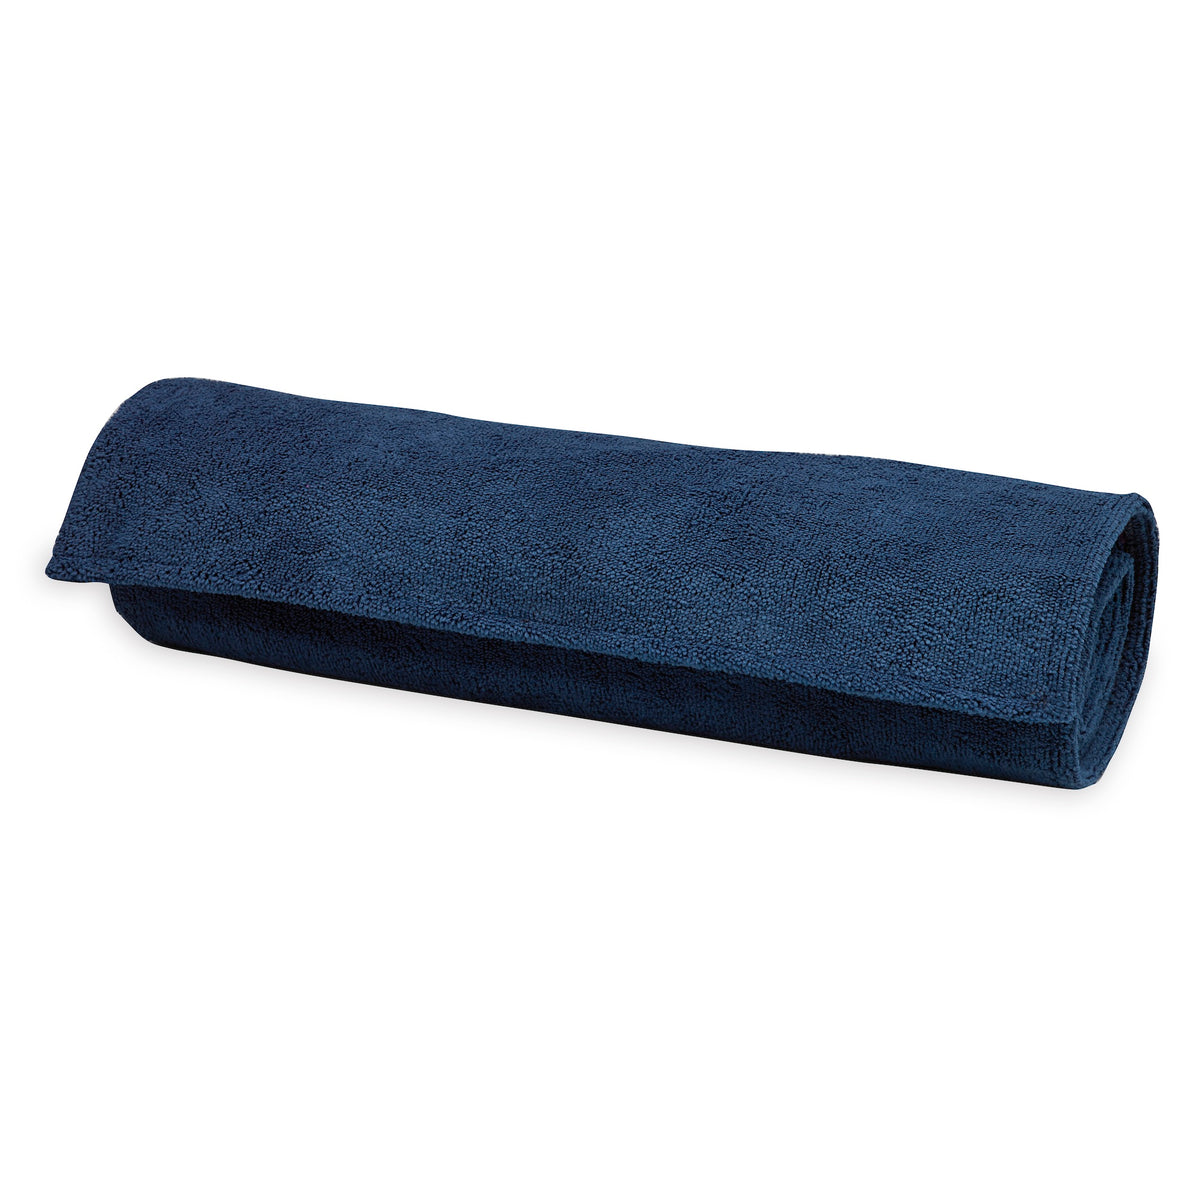 GAIAM Dual-Grip Grippy Yoga Mat Towel - 68'' x 24'' Navy/Fushia